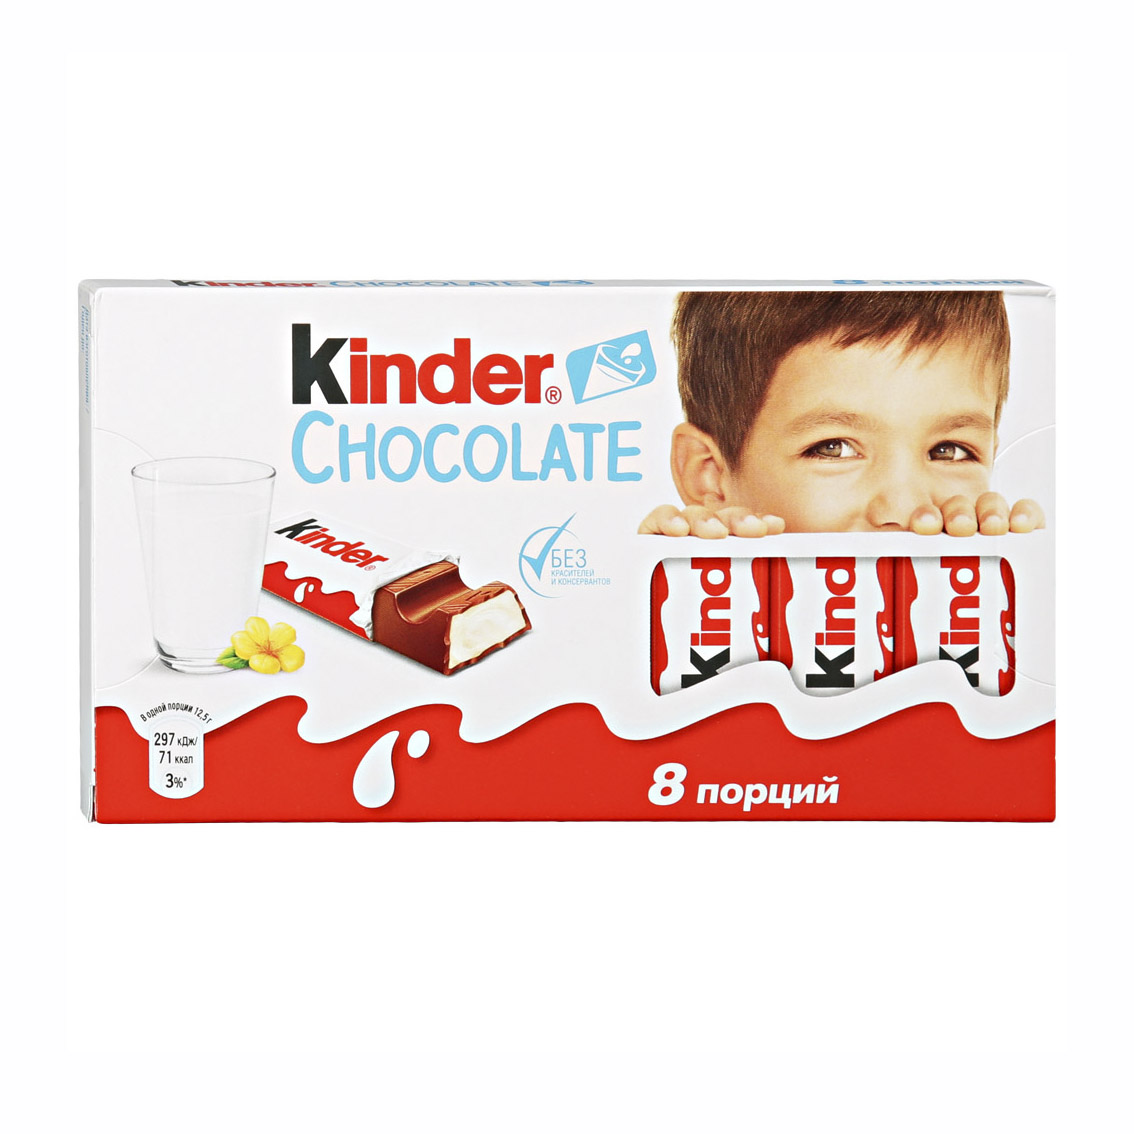 Шоколад Kinder Chocolate с молочной начинкой 100 г шоколад молочный kinder с молочной начинкой 100 г